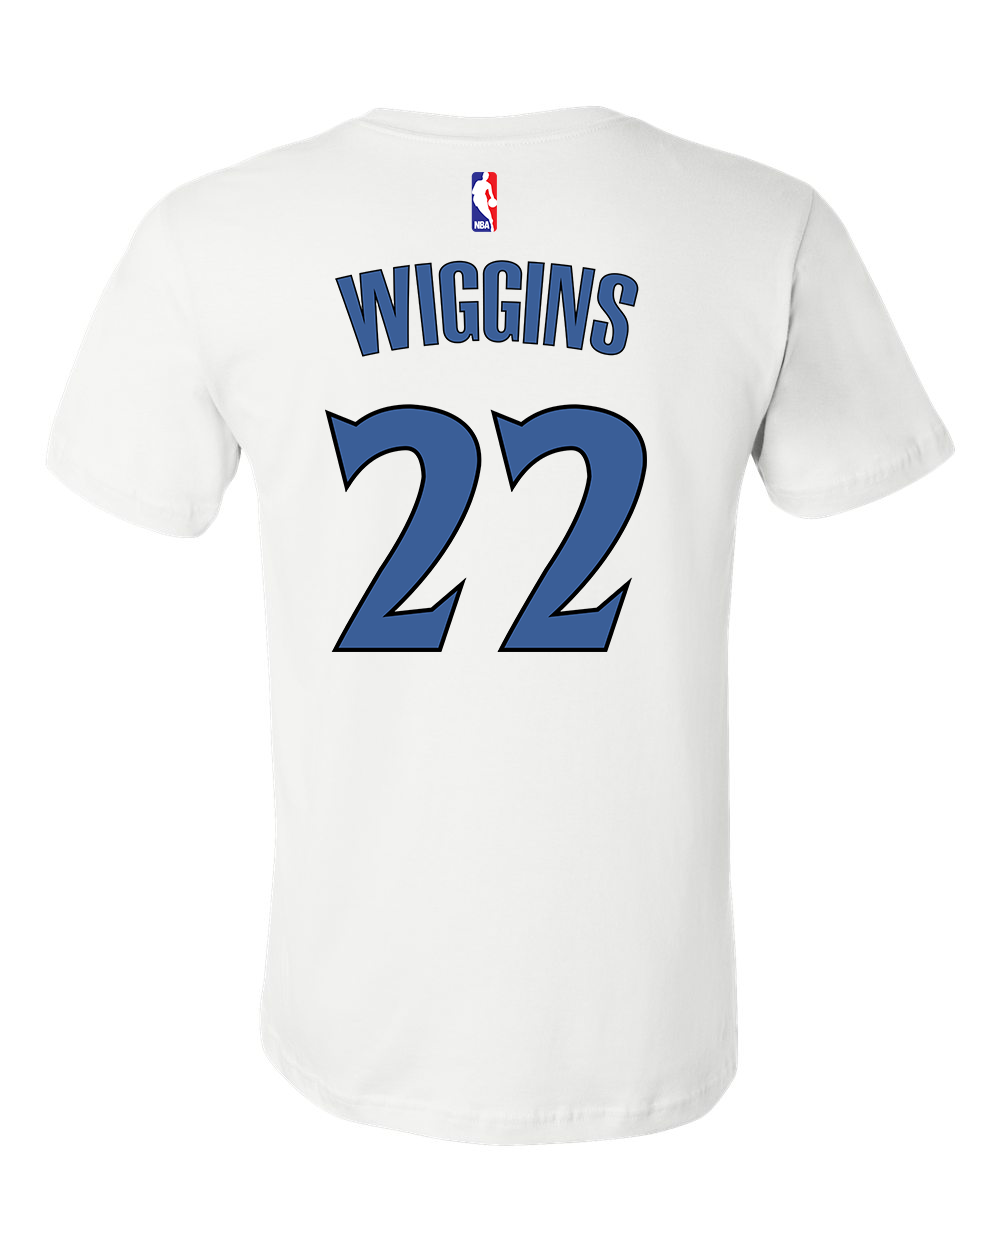 adidas, Shirts, Andrew Wiggins Minnesota Timberwolves Jersey